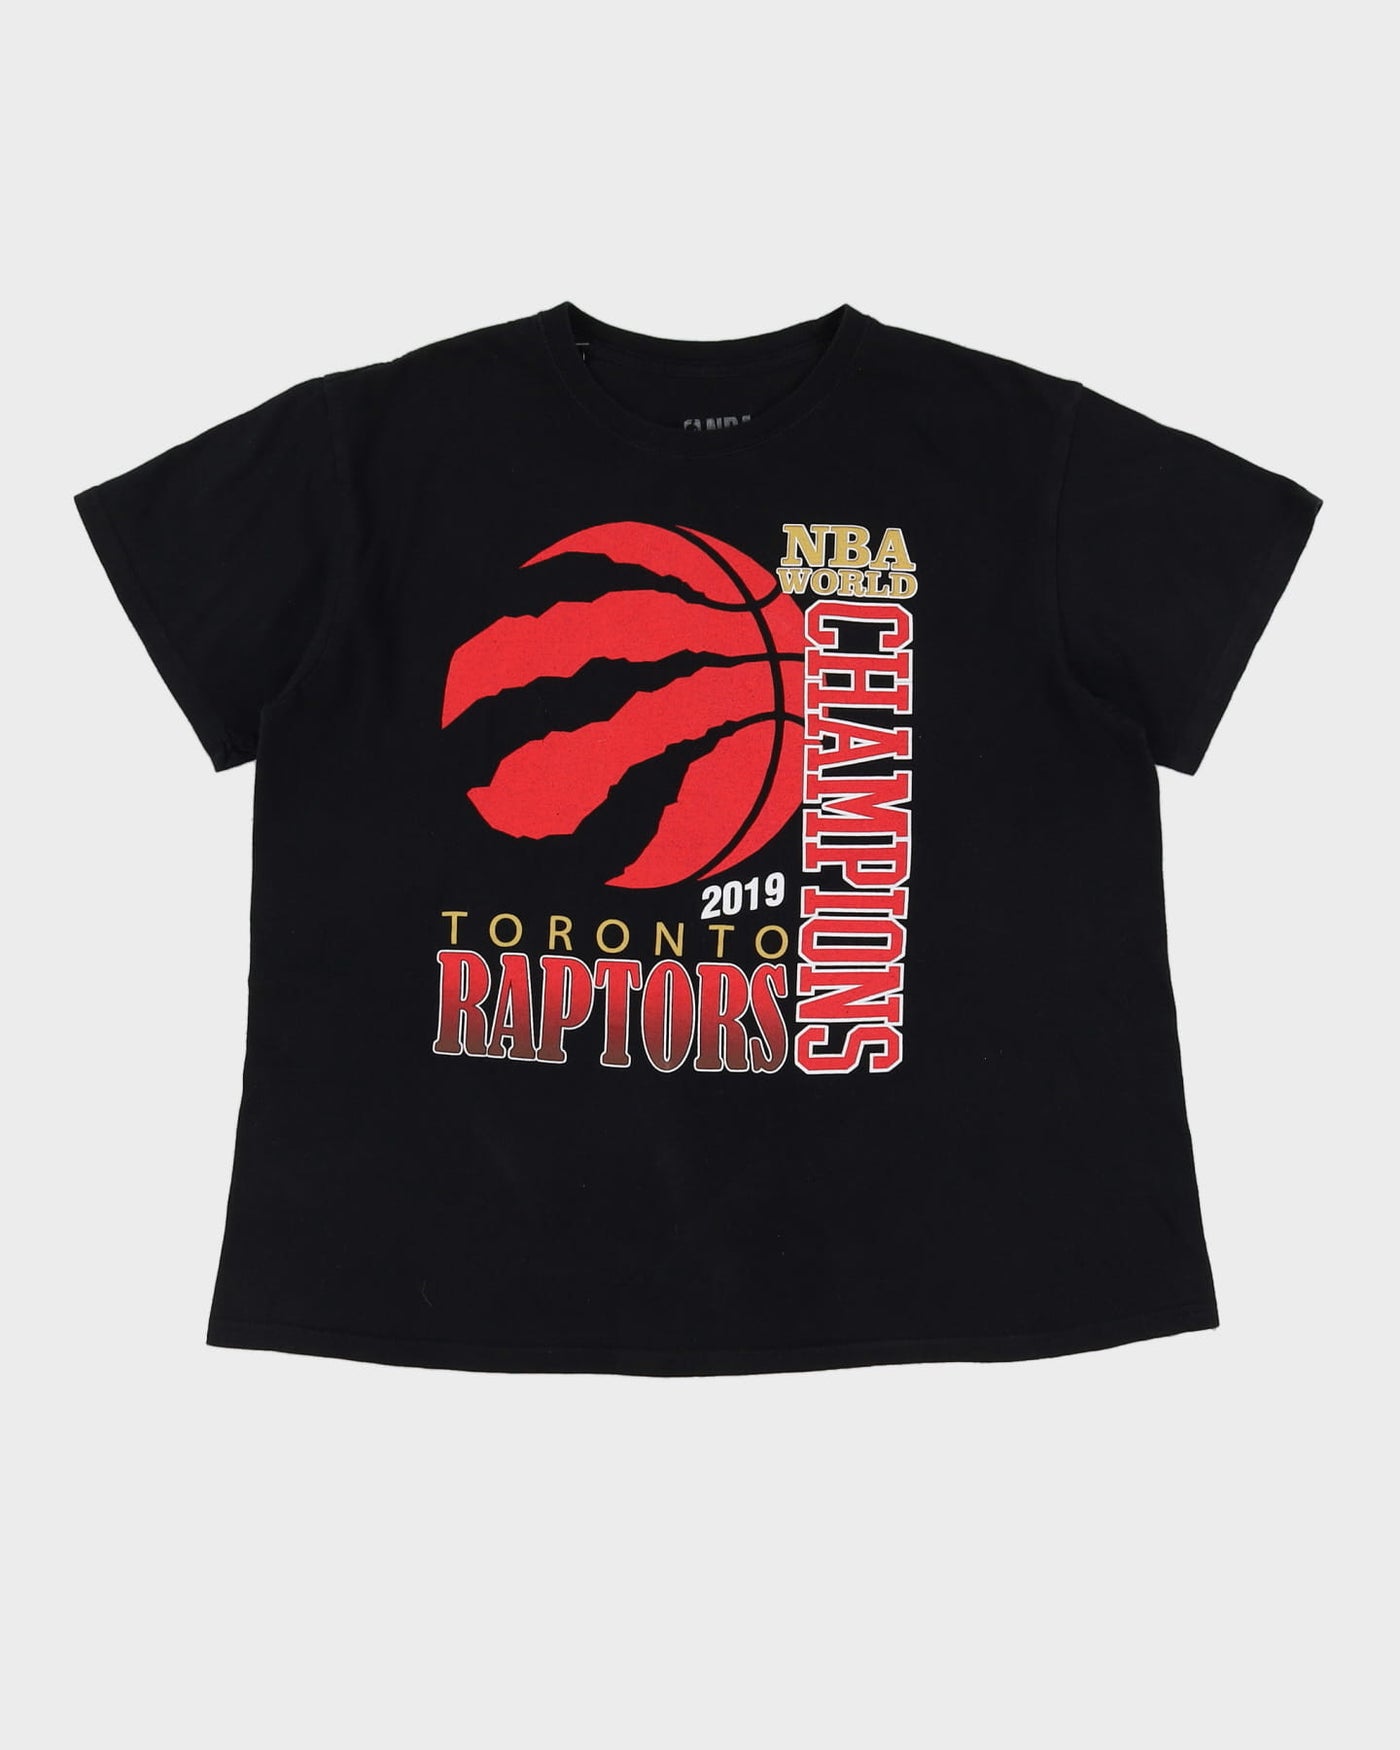 2019 Toronto Raptors NBA World Champions Black Graphic T-Shirt - XL